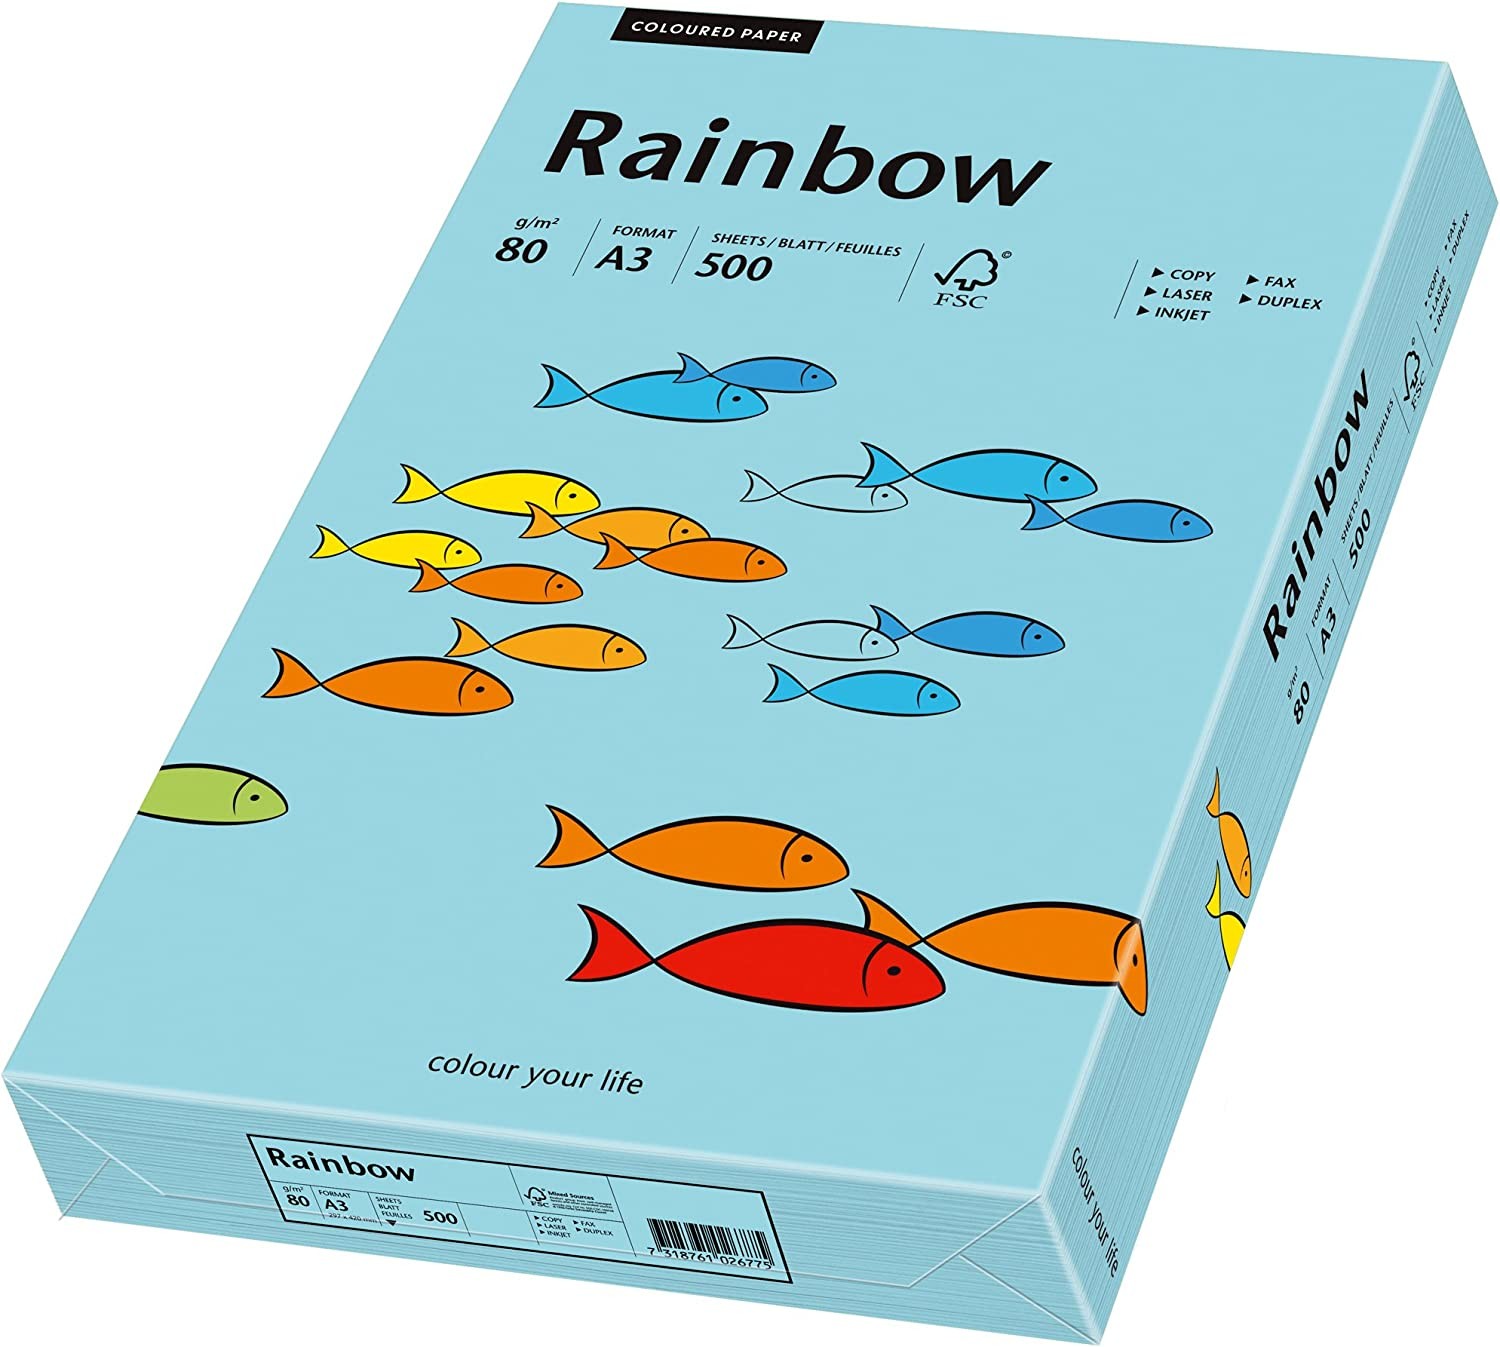 Kopipapir Rainbow A3 medium blå 80g farve 84 pk/500